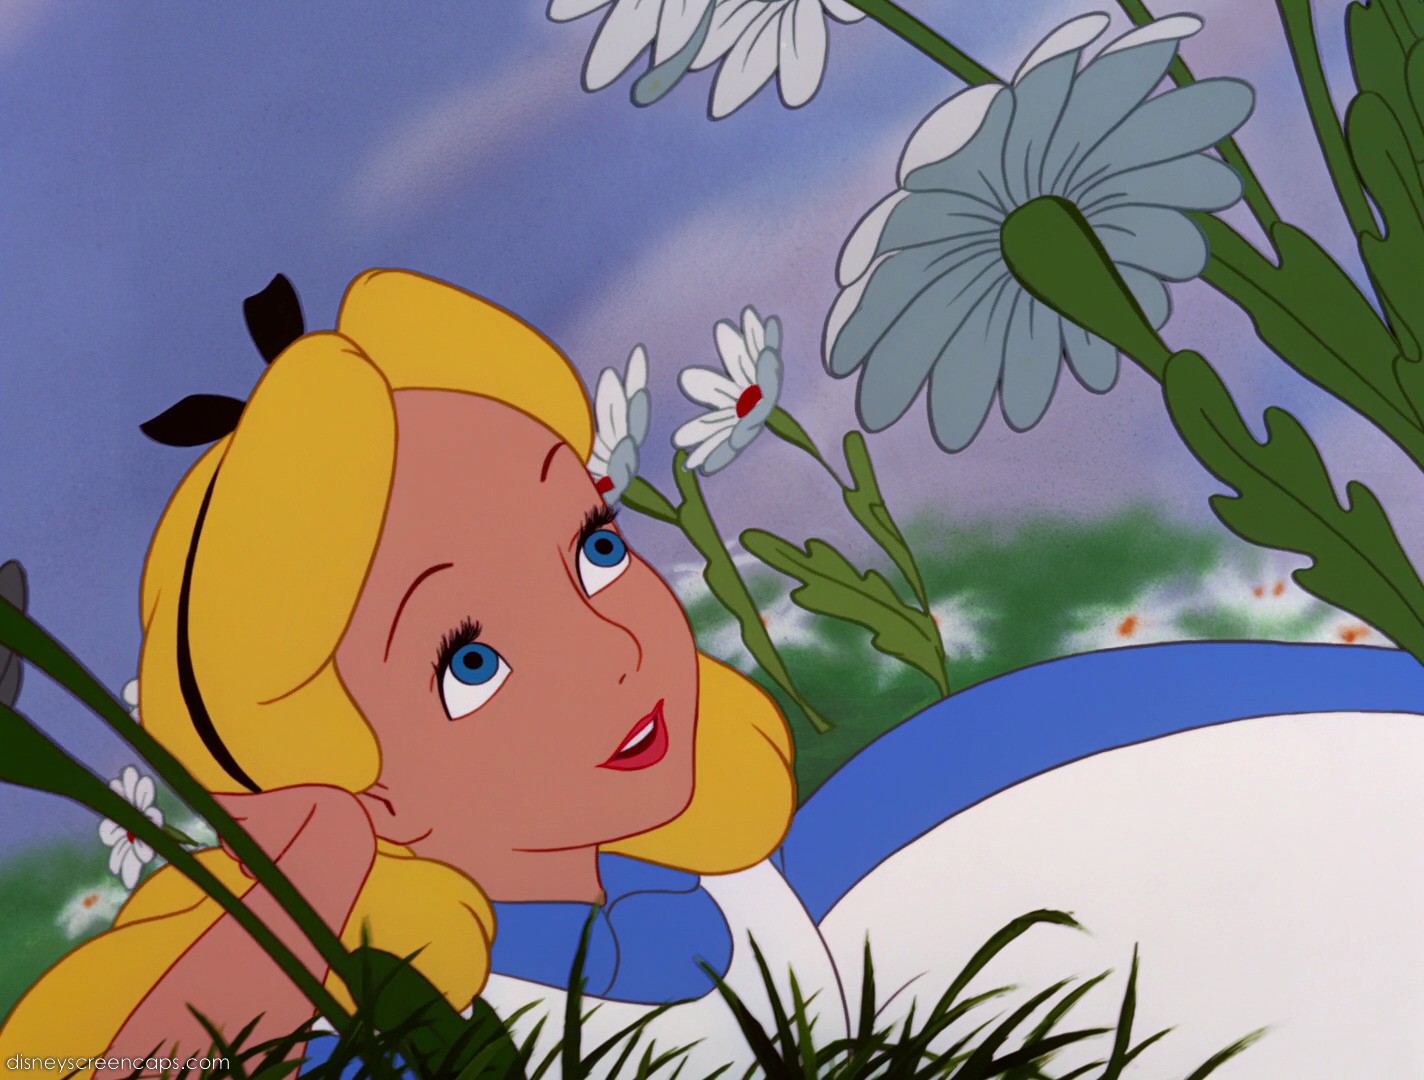 Alice from Alice in Wonderland - wide 5